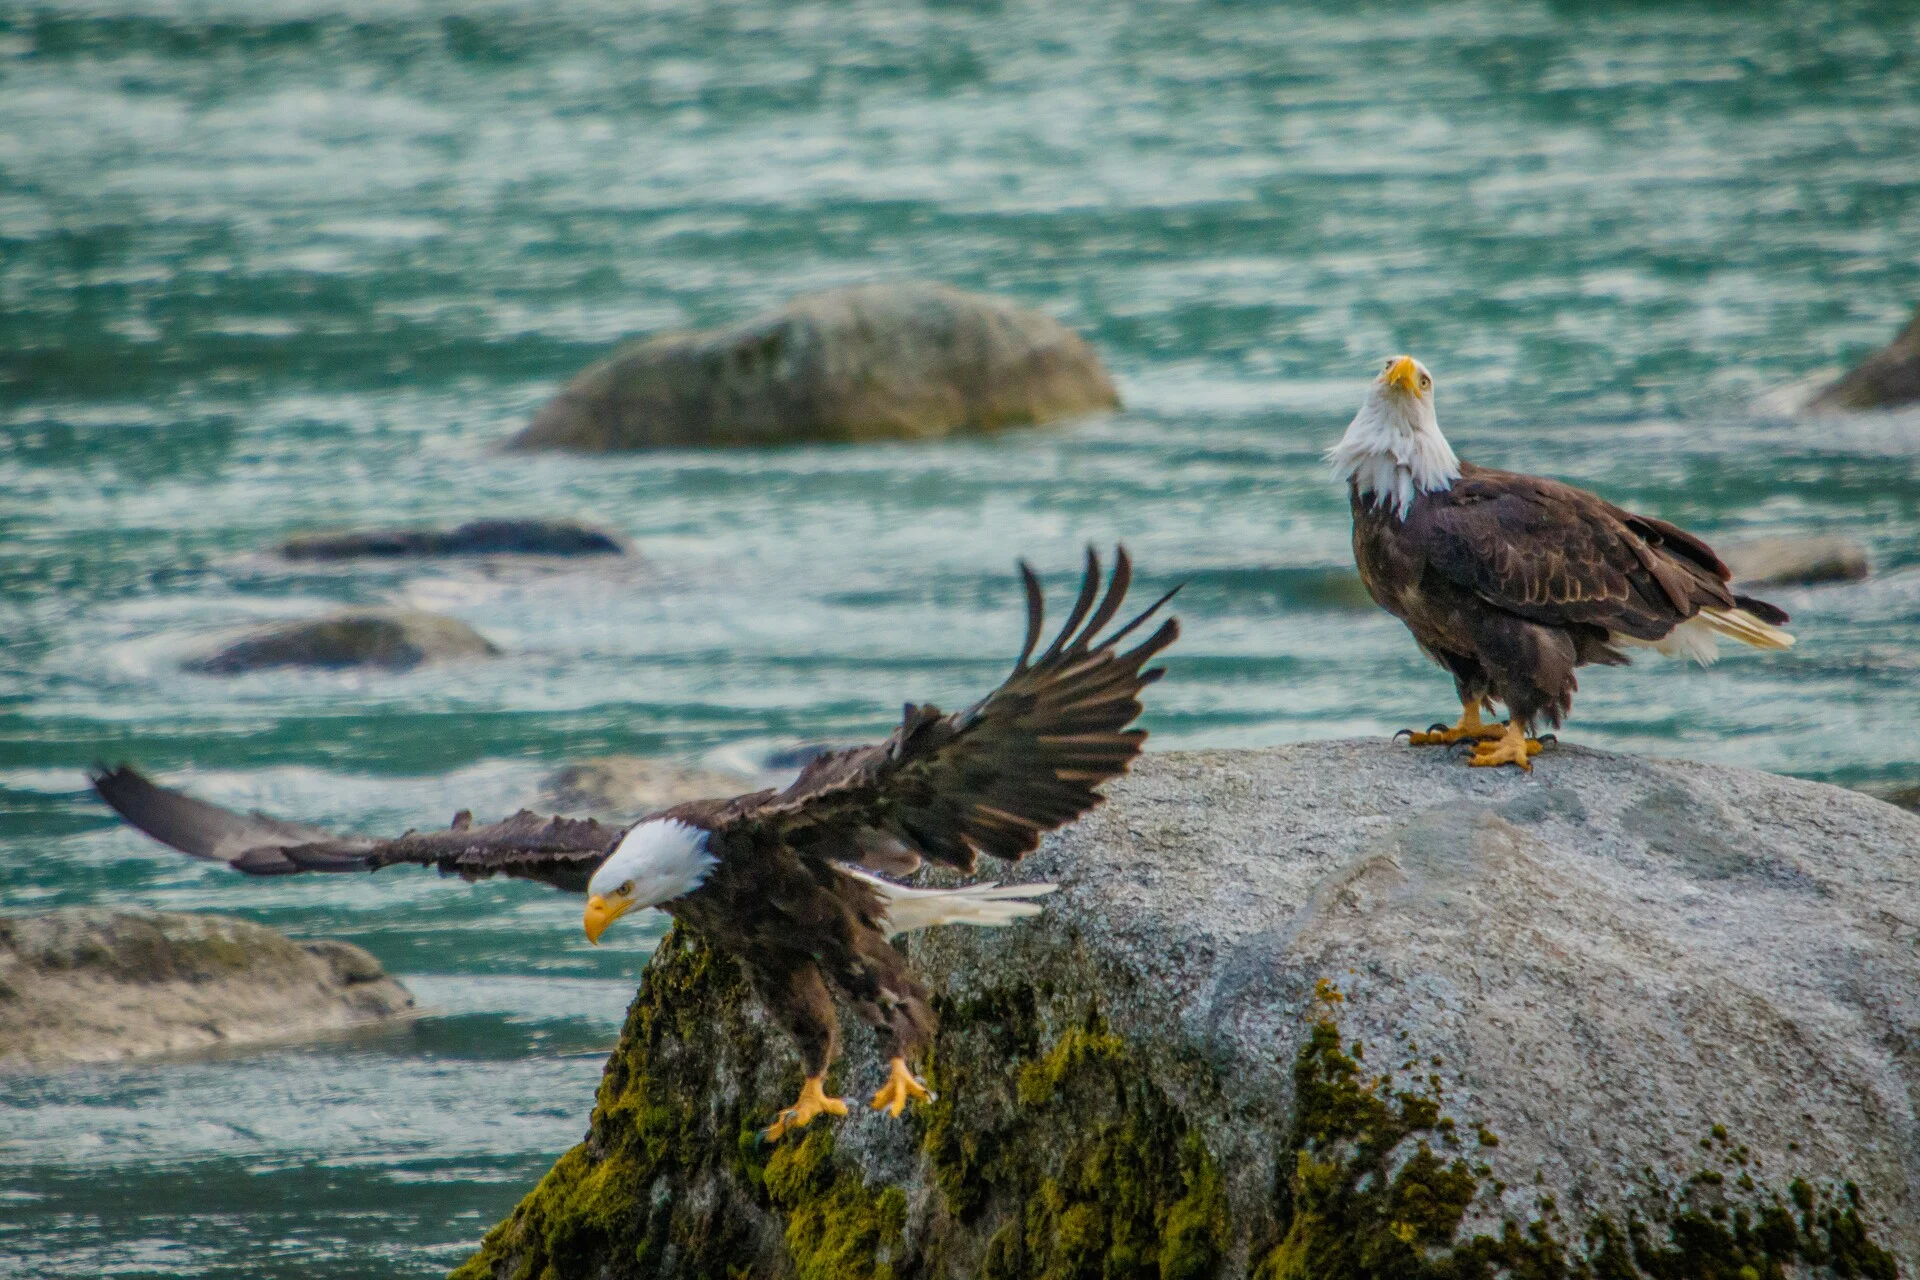 Bald Eagles in Haines, Alaska. Credit: Shutterstock